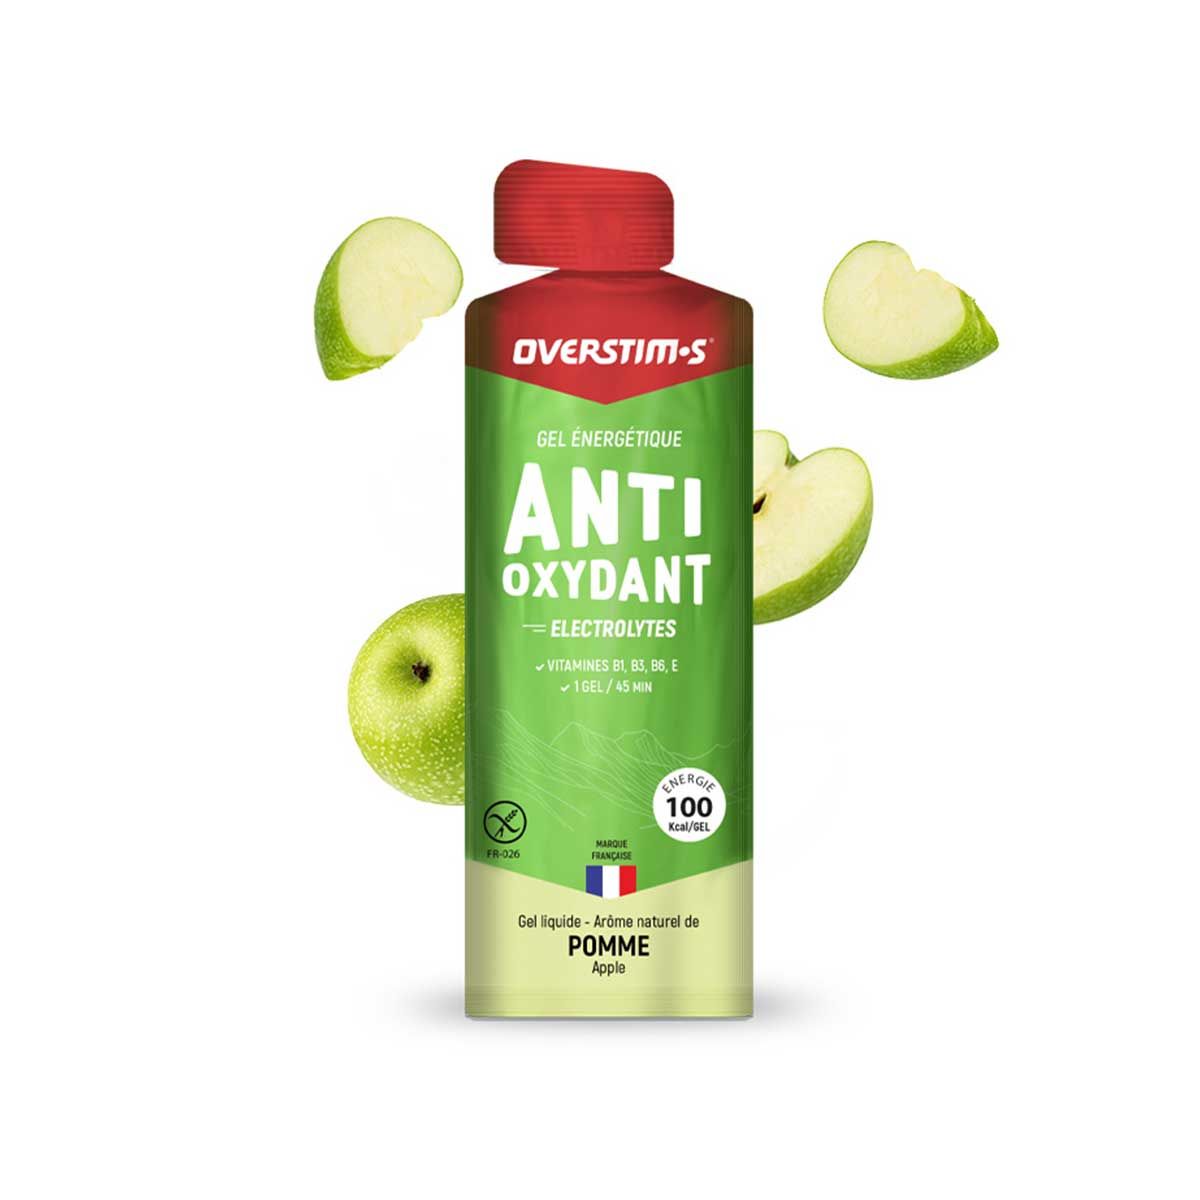 Overstim.s Antioxydant gel - Magnesium - Green apple